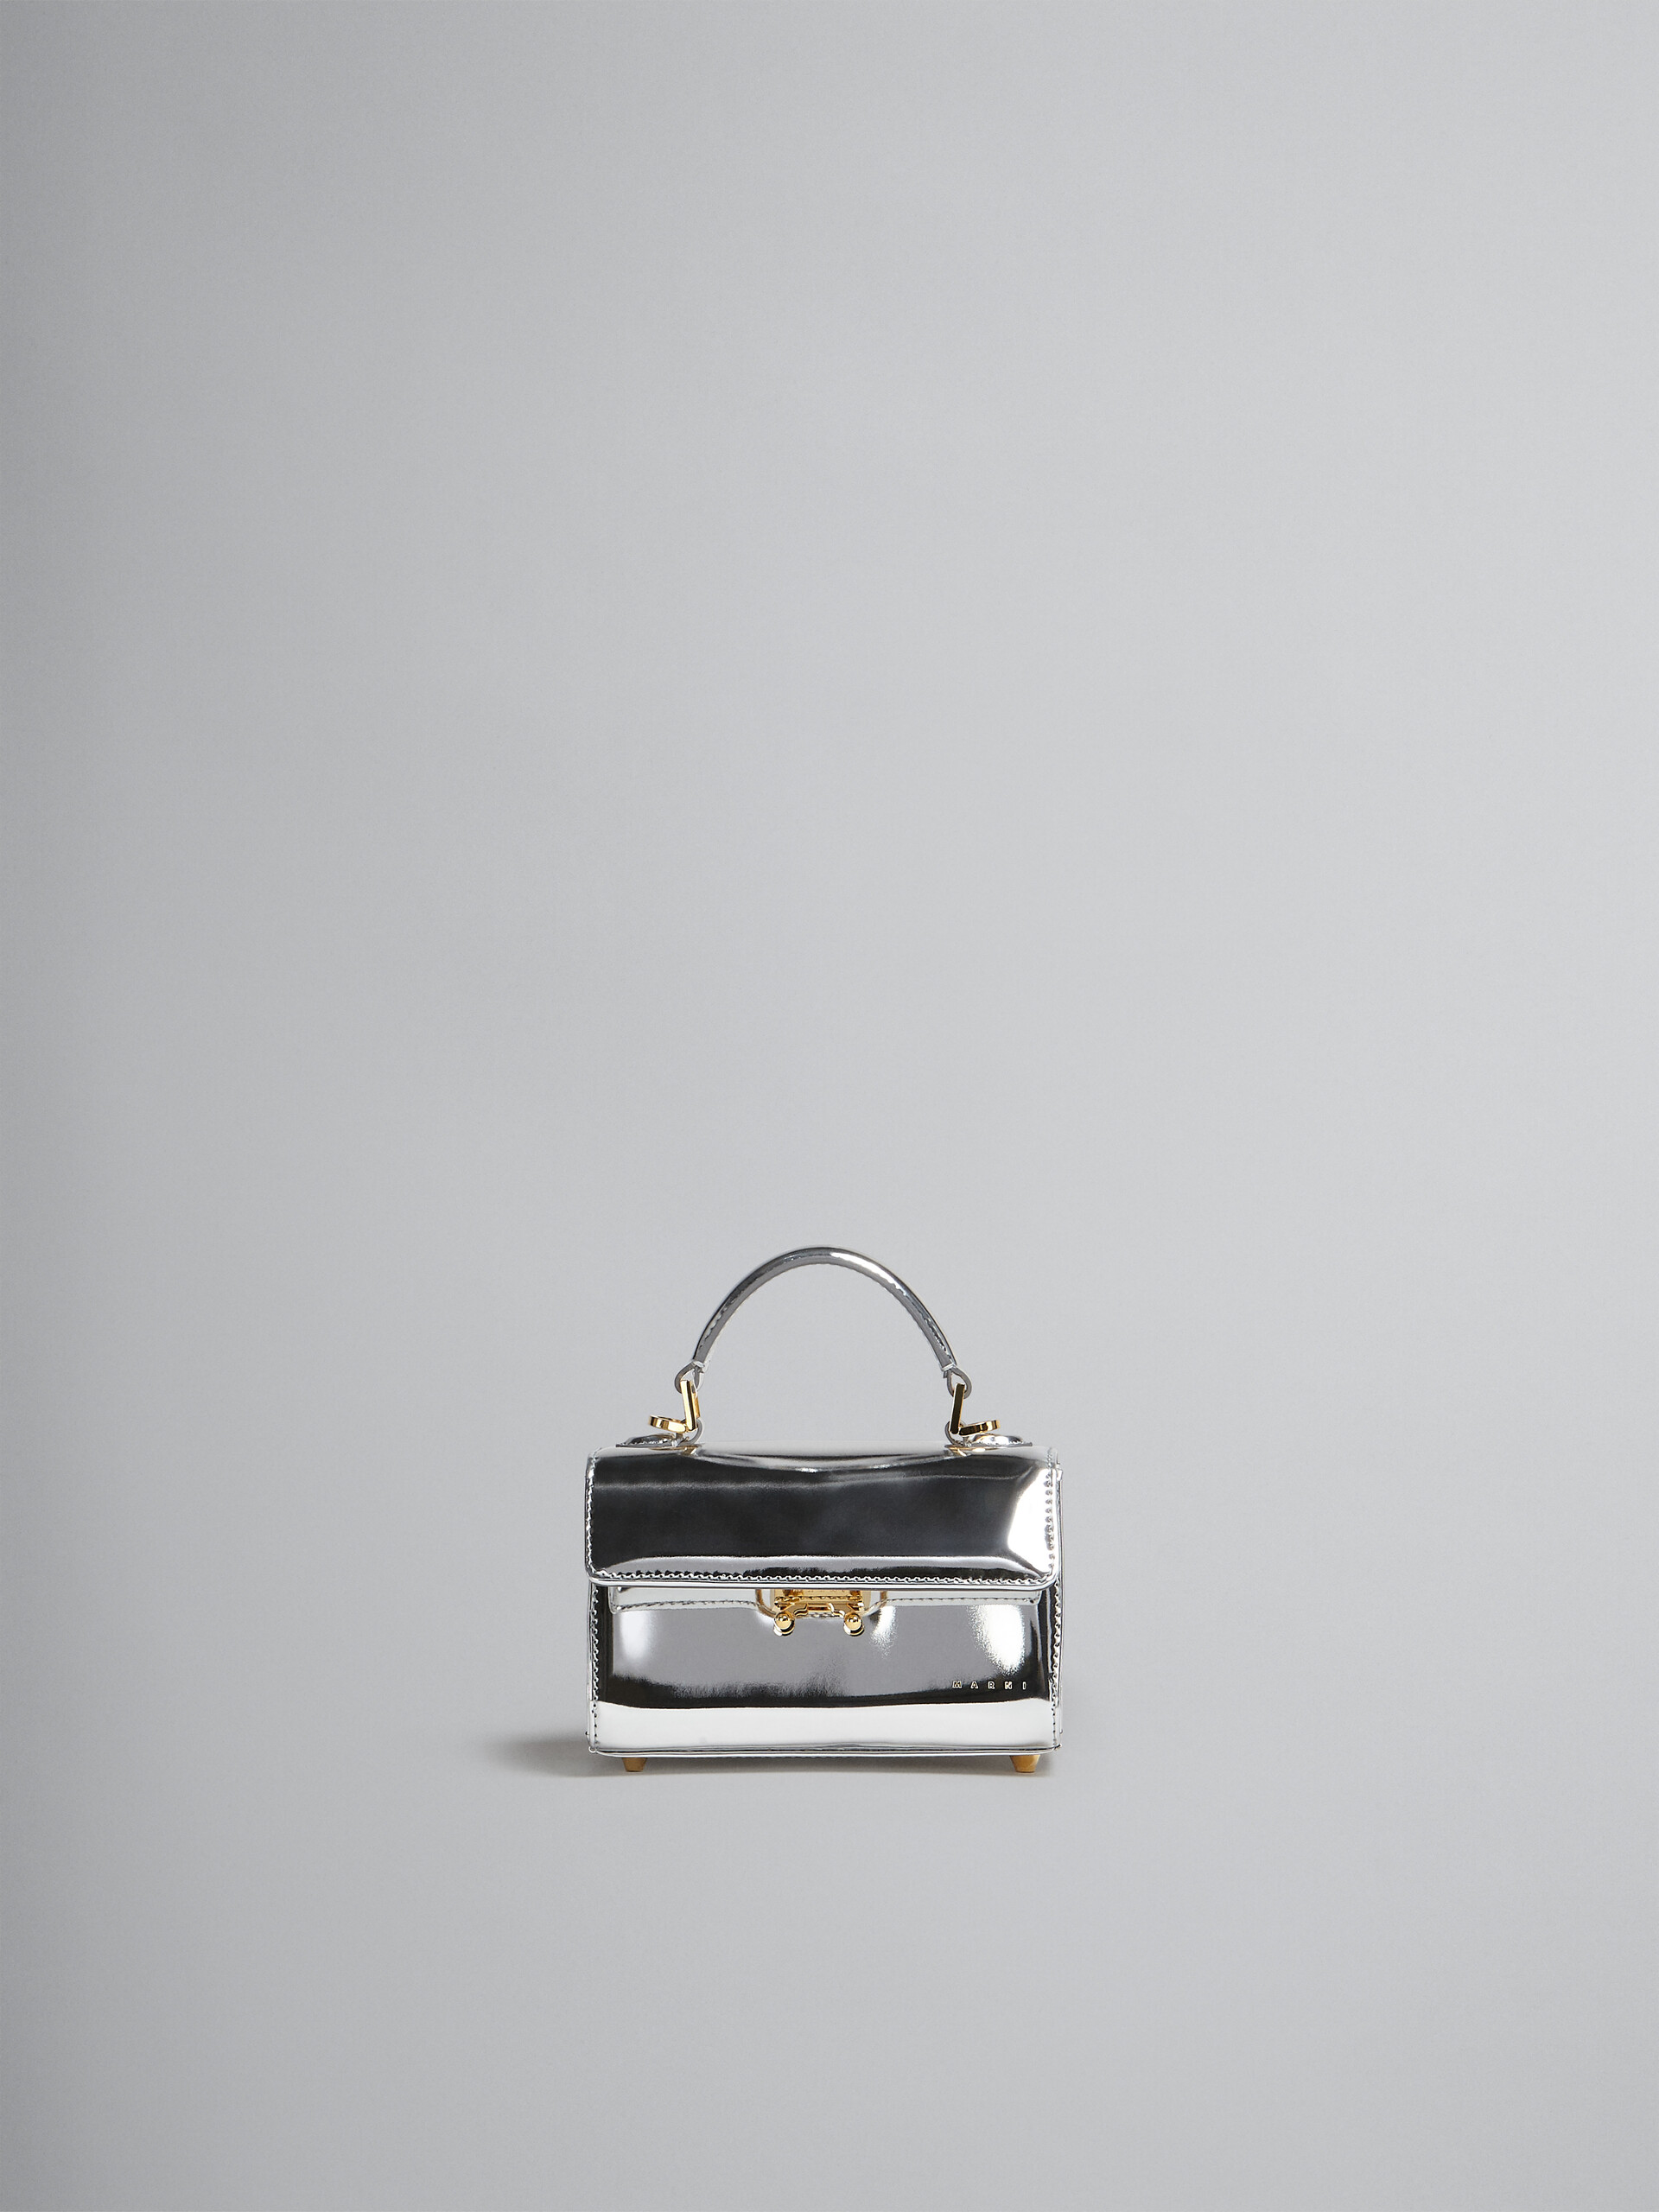 Relativity Mini Bag in silver mirrored leather - Handbags - Image 1